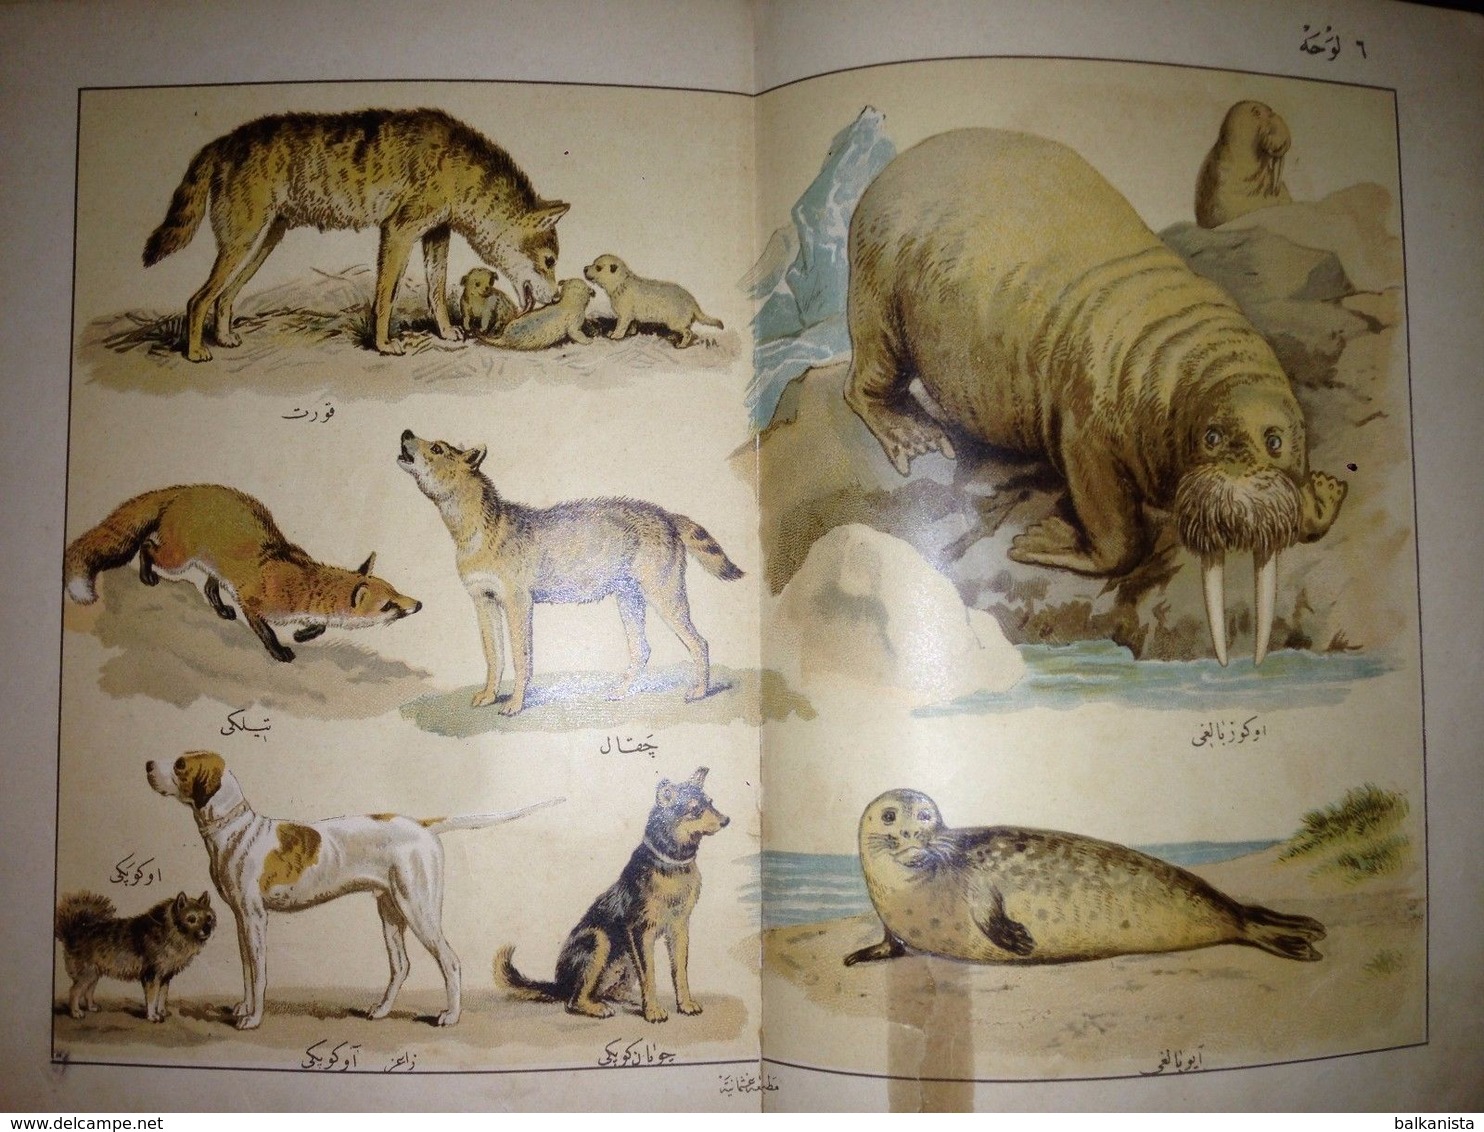 OTTOMAN- Musavver Tarif-i Hayvanat Illustrated Guide to Animals Colored 1893